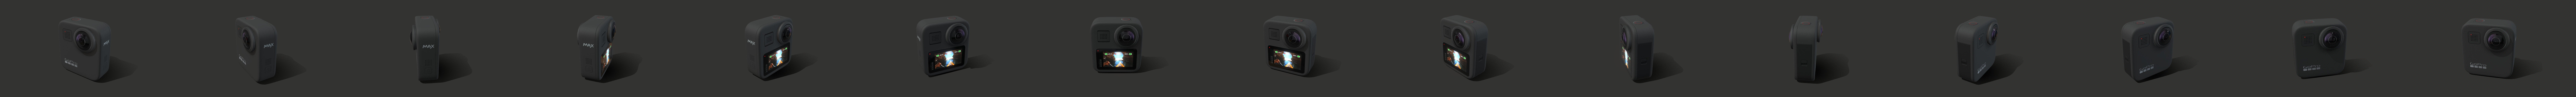 Gopro Max Free Download Download Free 3d Model By Alexandre Avranches Alexandre Avranches 56fcf Sketchfab